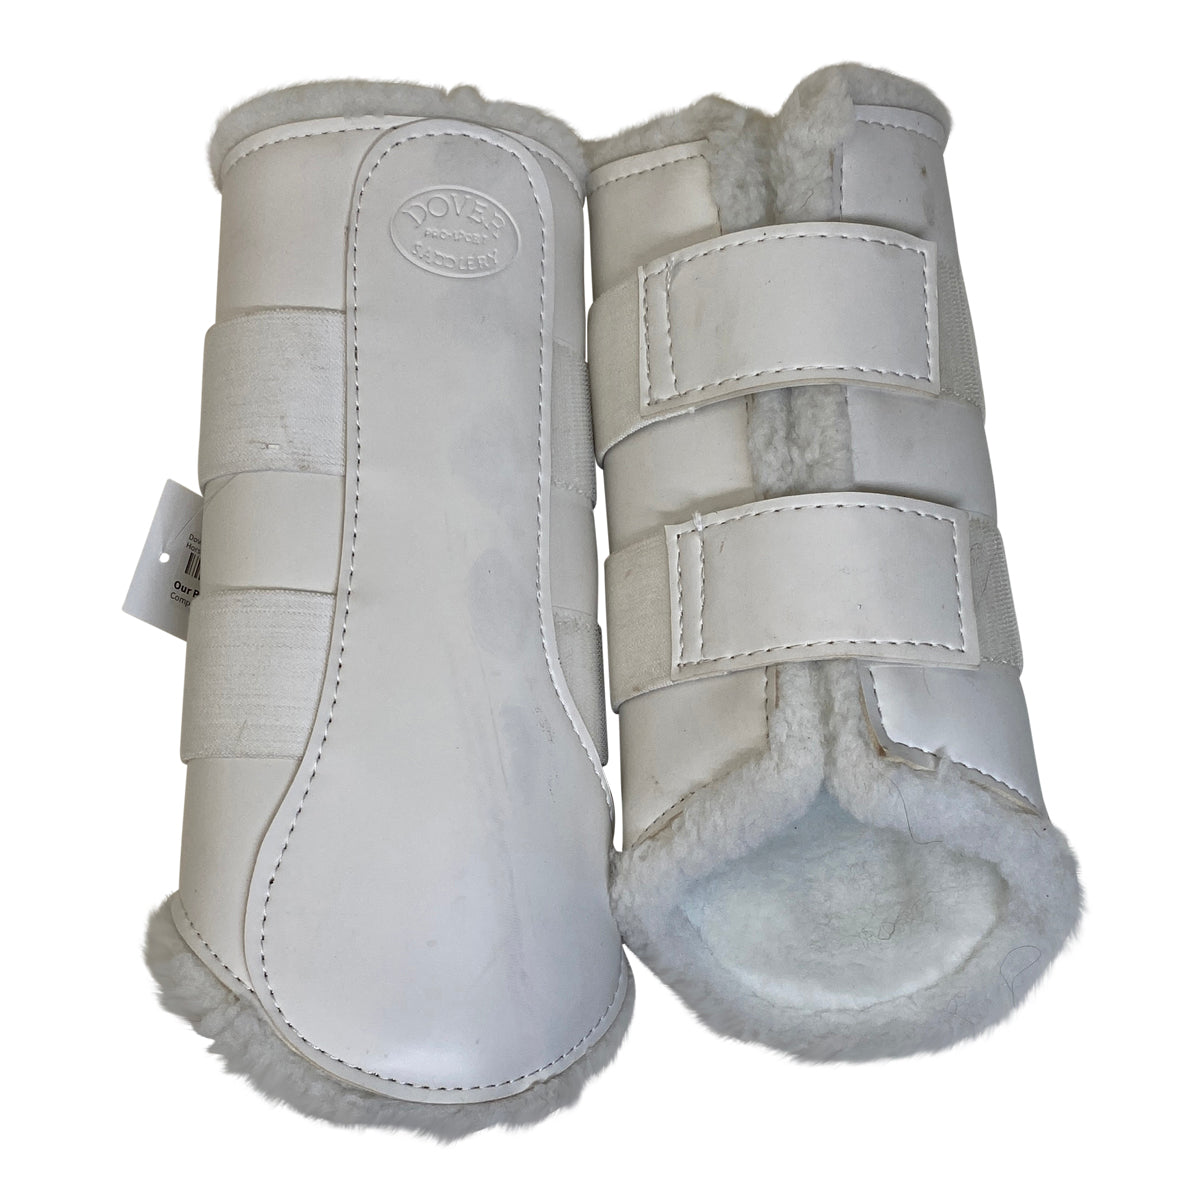 Dover Fleece Sport Boots in White